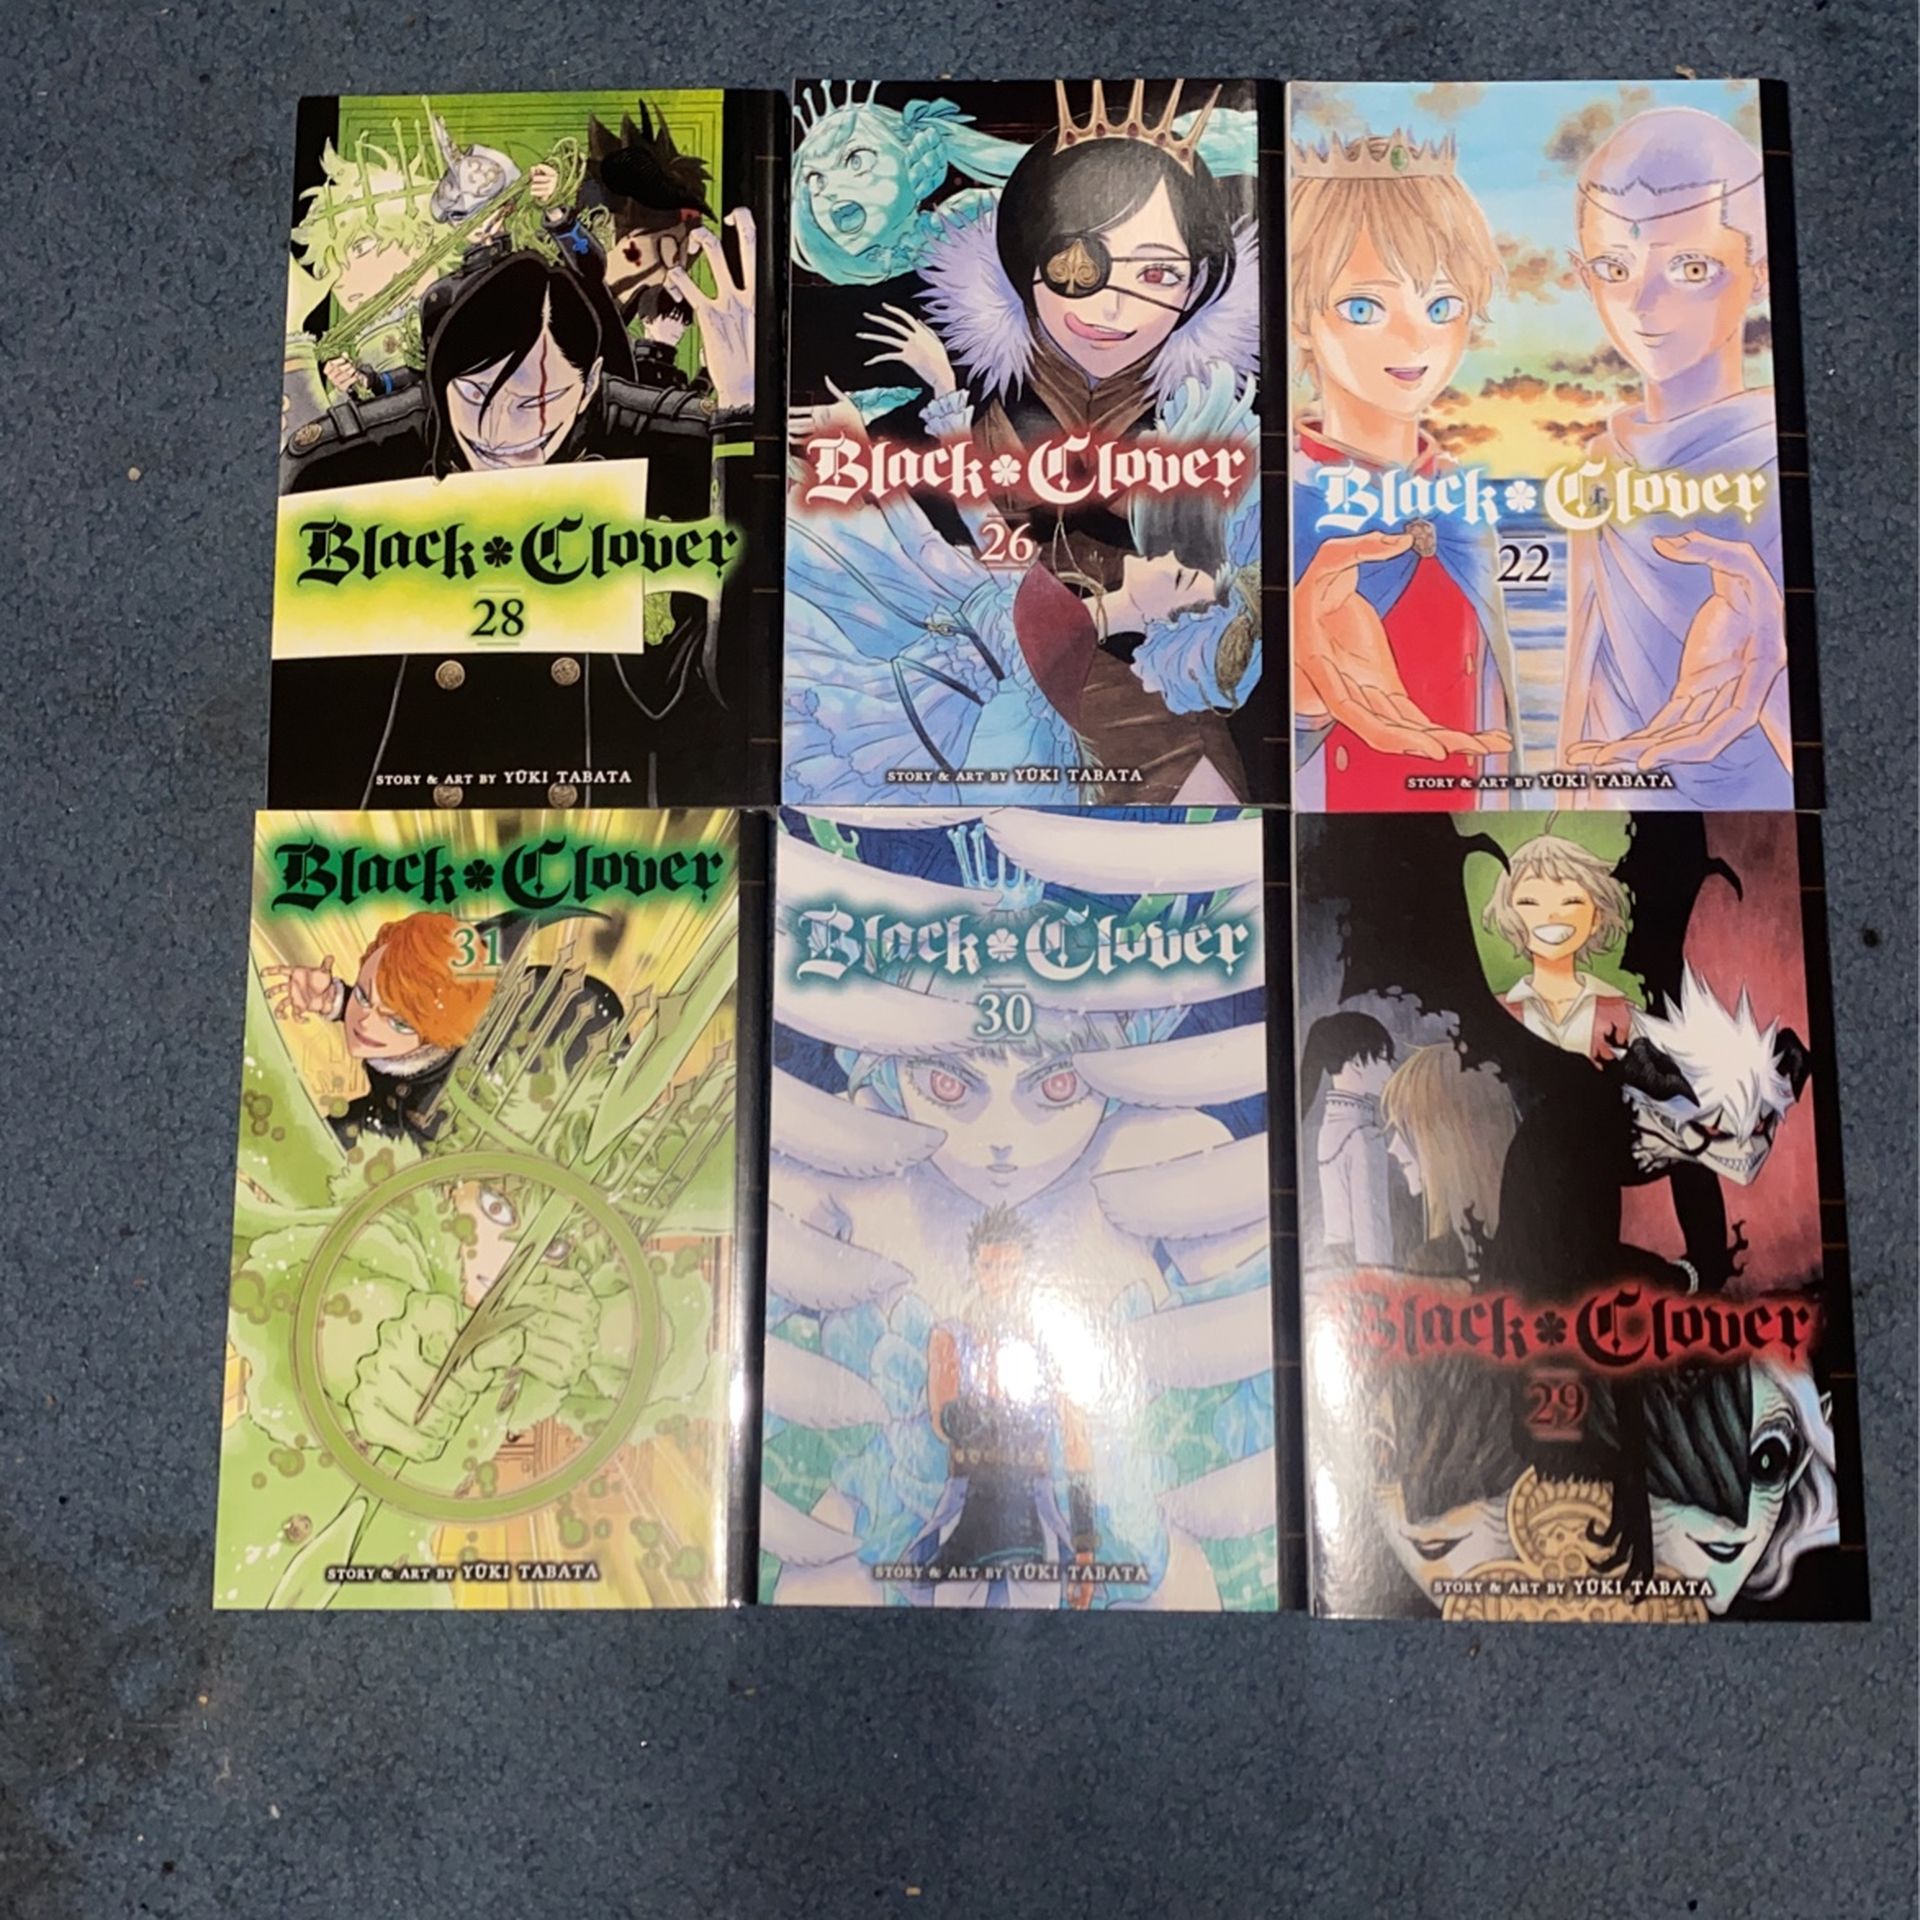 6 Volumes Of Black Clover Manga